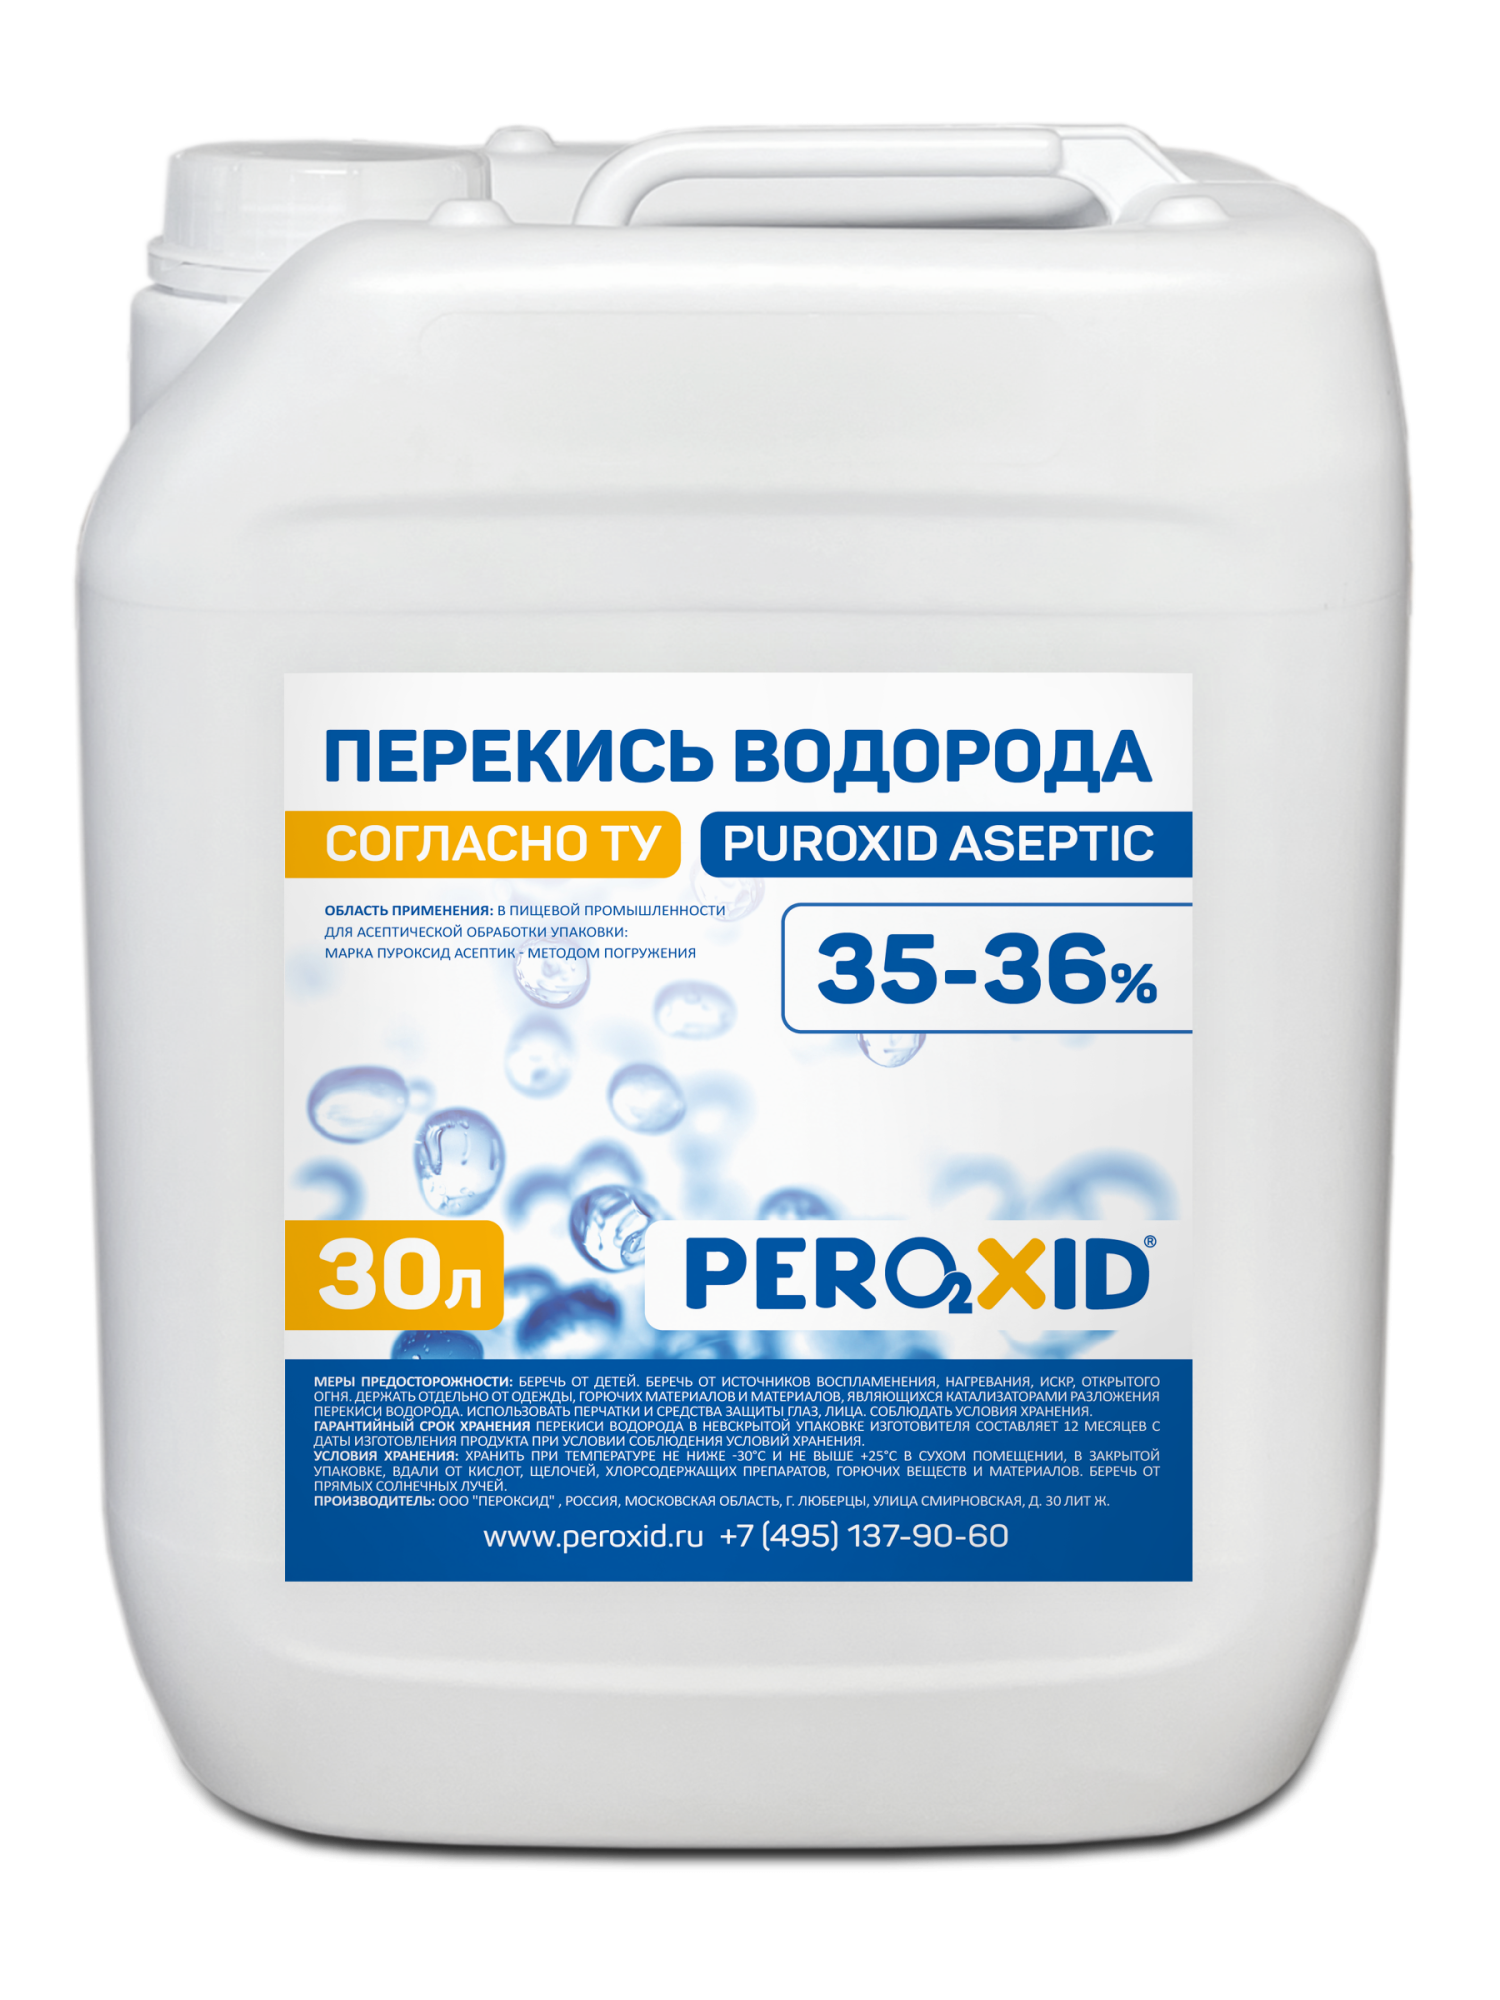 Перекись водорода асептическая PEROXID 35-36% марка Пуроксид асептик ТУ 2123-004-25665344-2009 30 л/34 кг